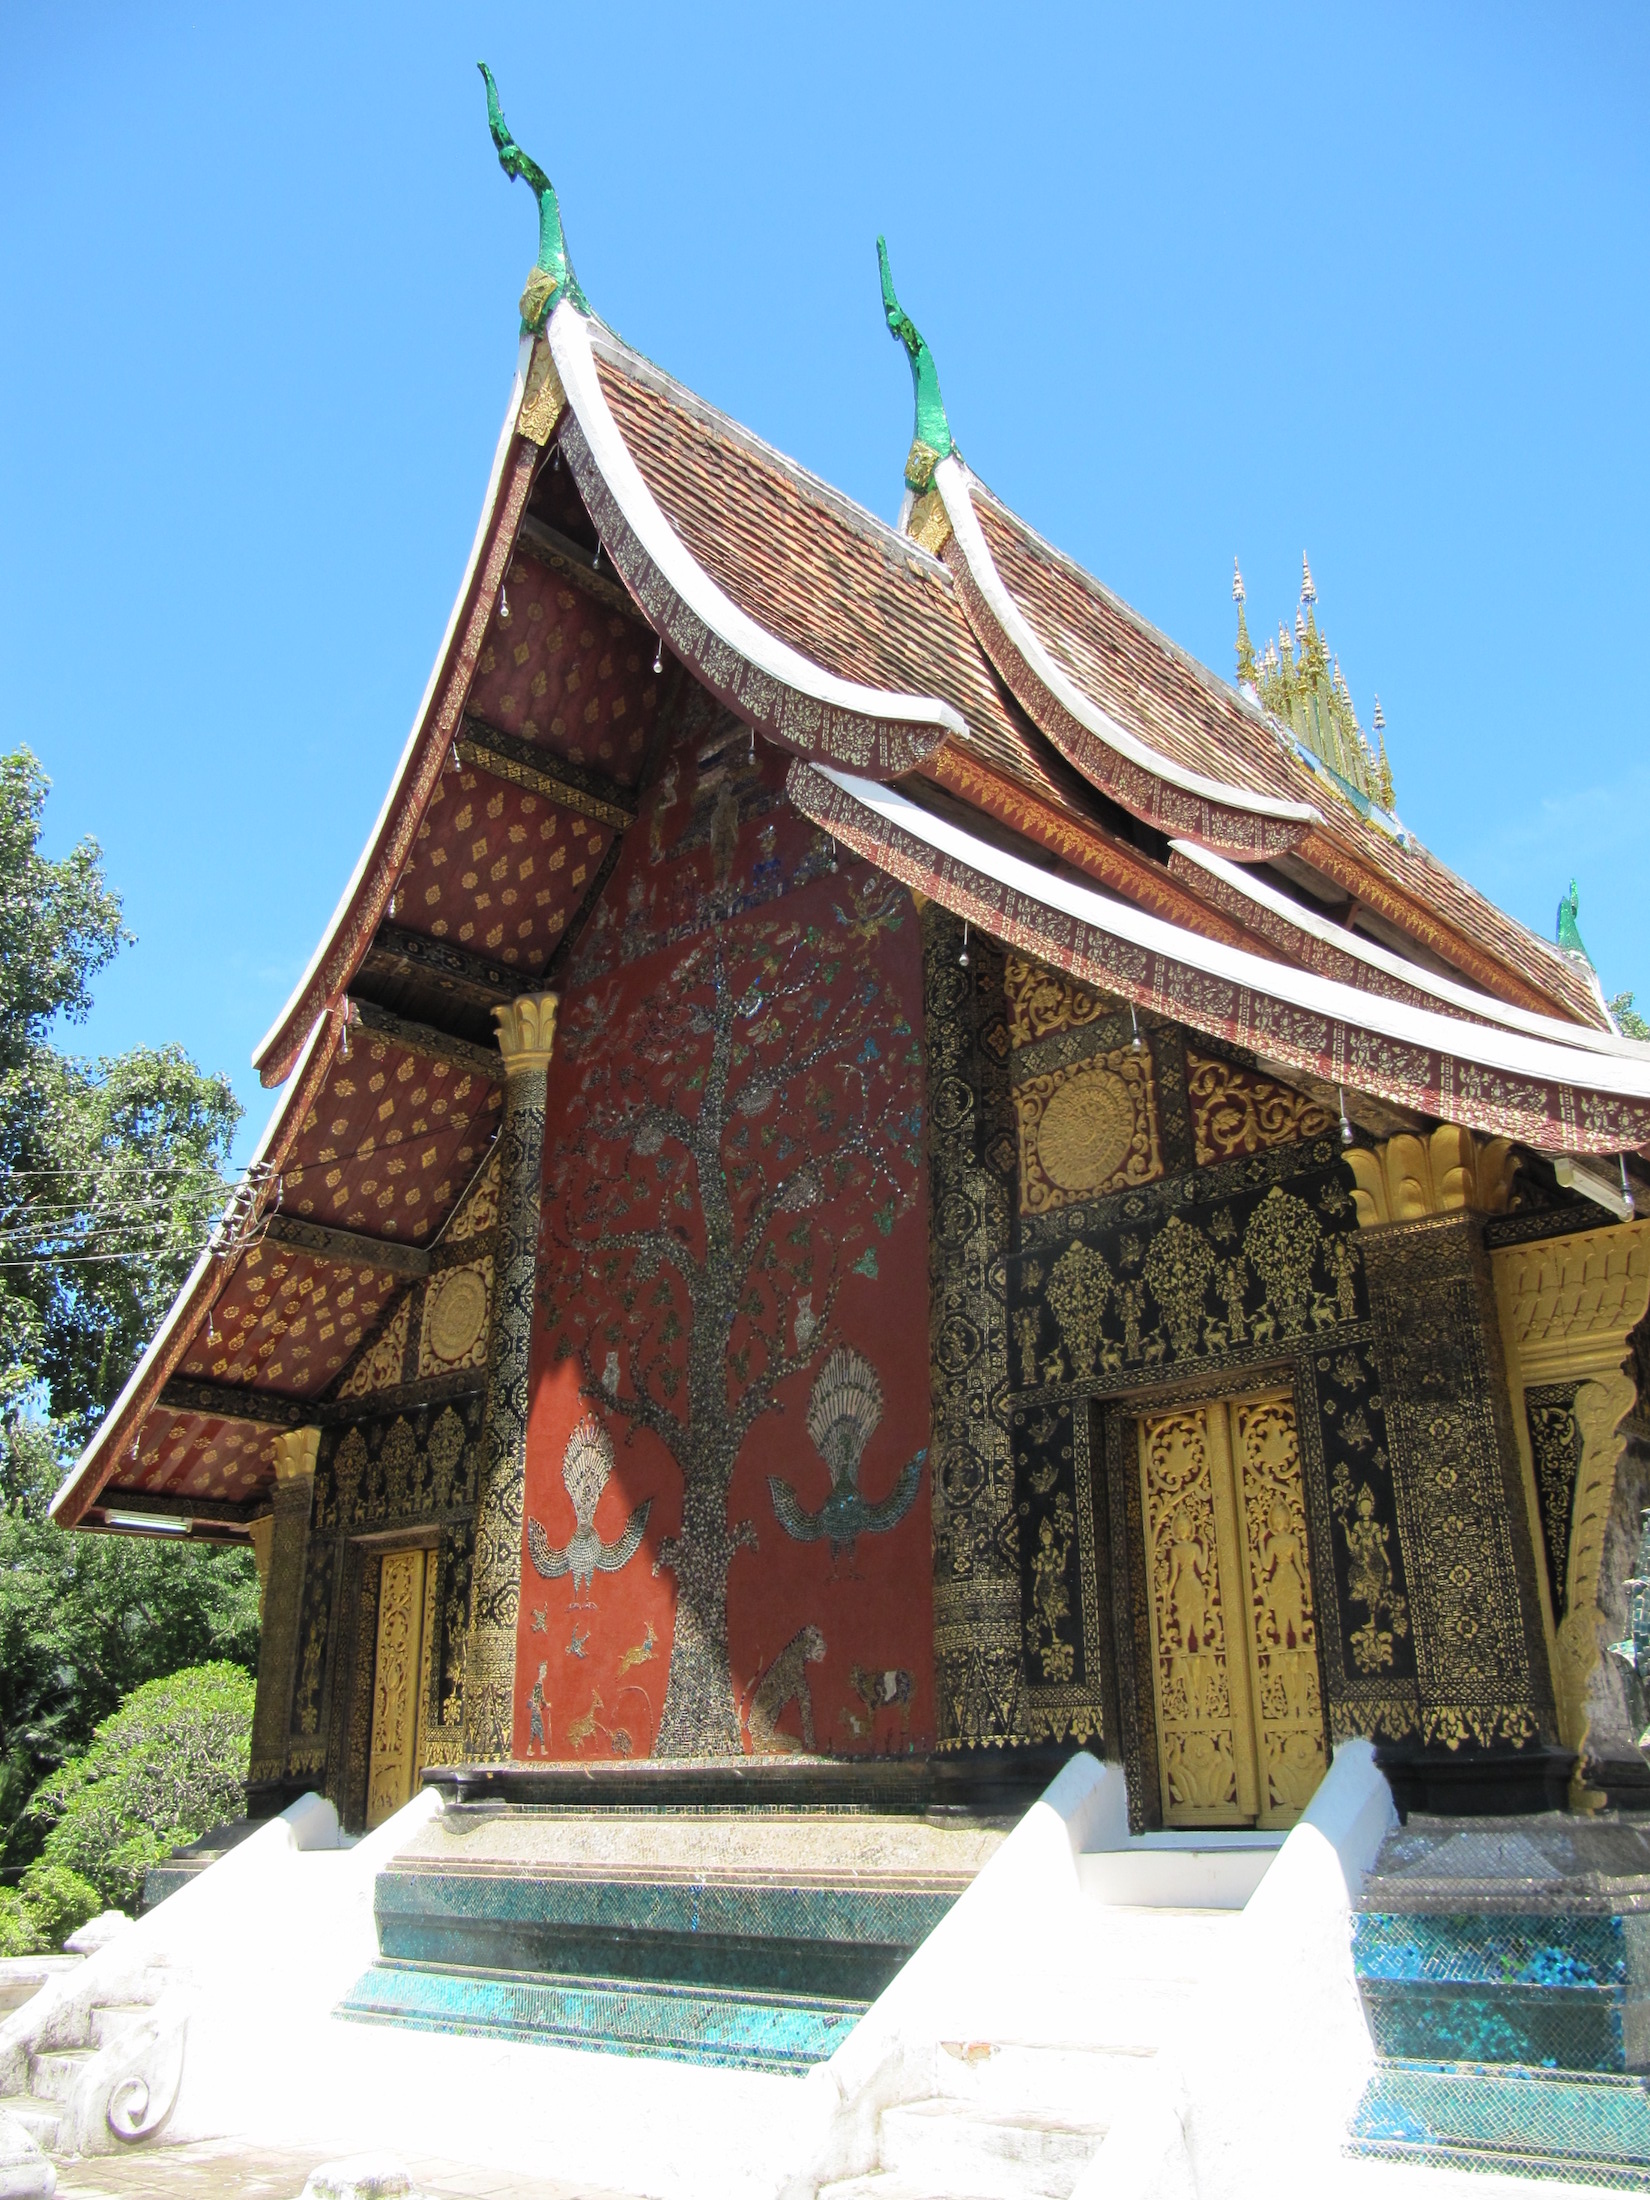 A Laotian temple